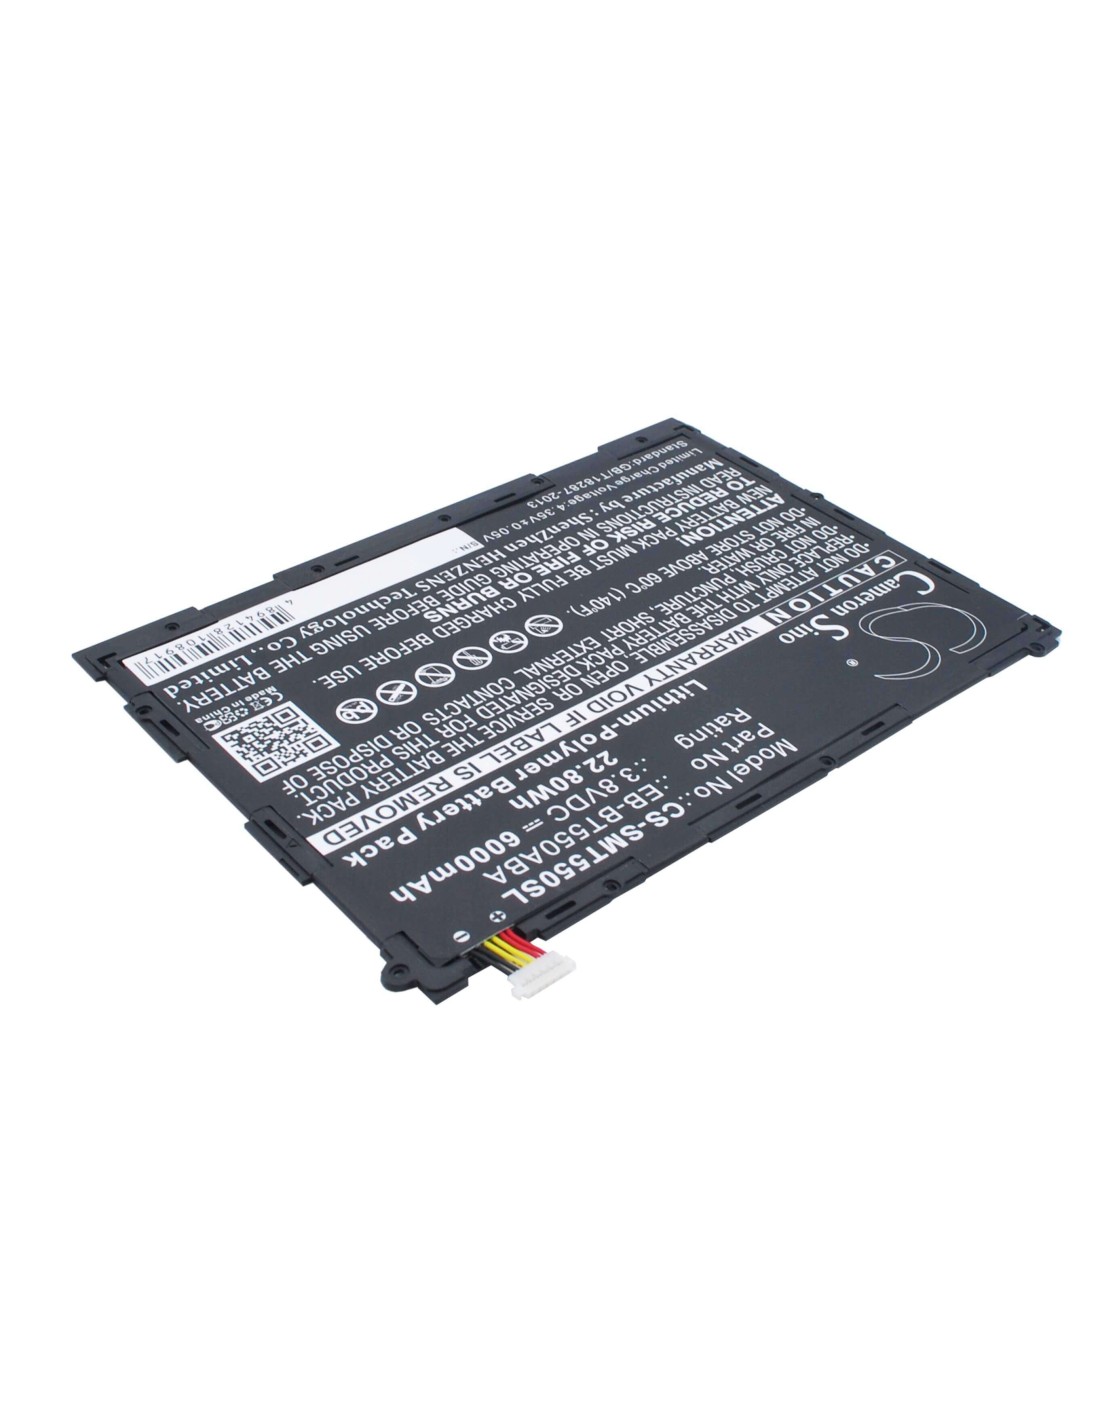 Battery for Samsung Galaxy Tab A 9.7, Sm-t550, Sm-p550 3.8V, 6000mAh - 22.80Wh